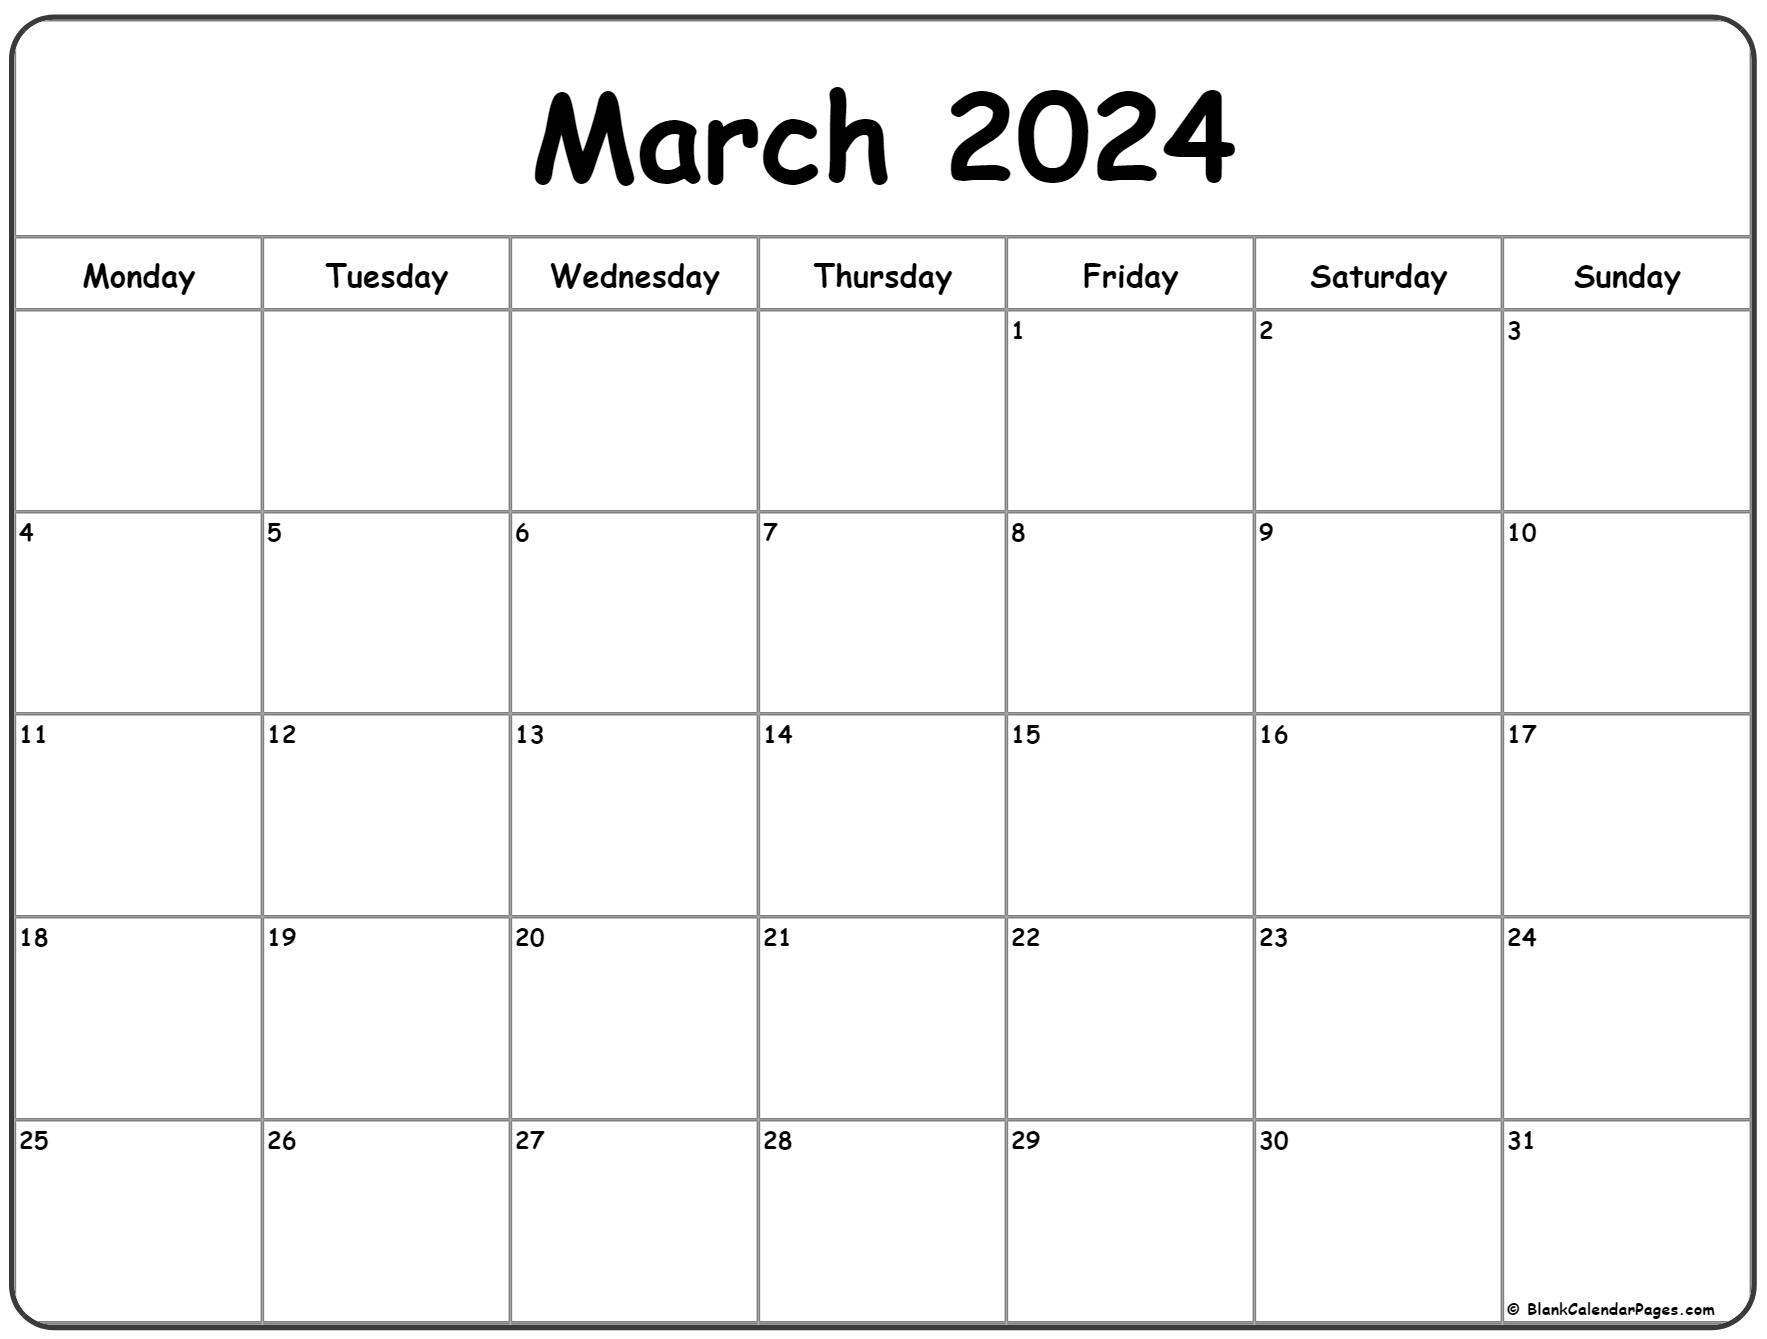 March 2024 Monday Calendar | Monday To Sunday for Printable Calendar 2024 March